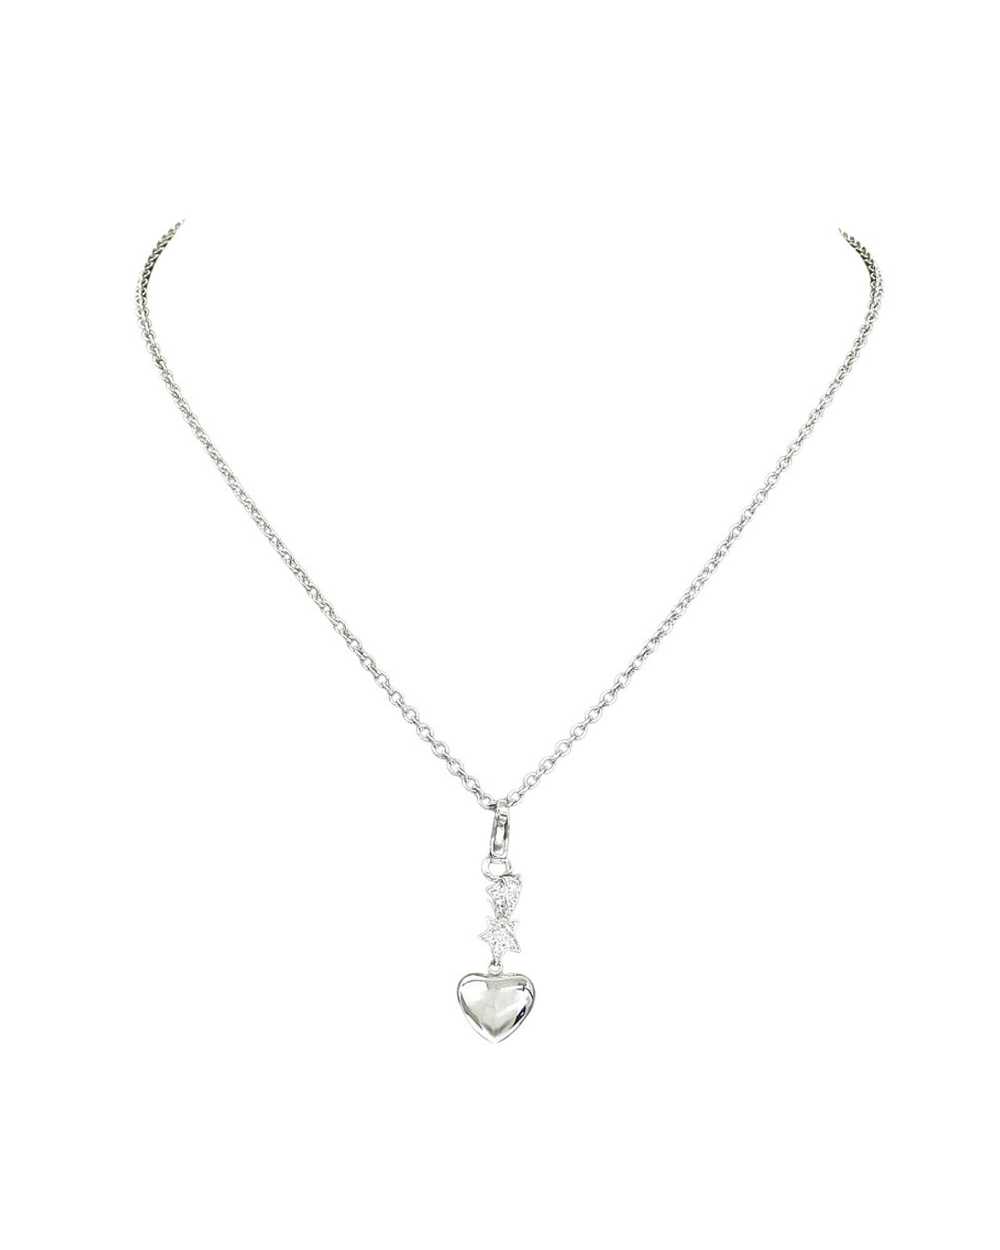 Chanel Elegant White Gold Comet Necklace - image 2